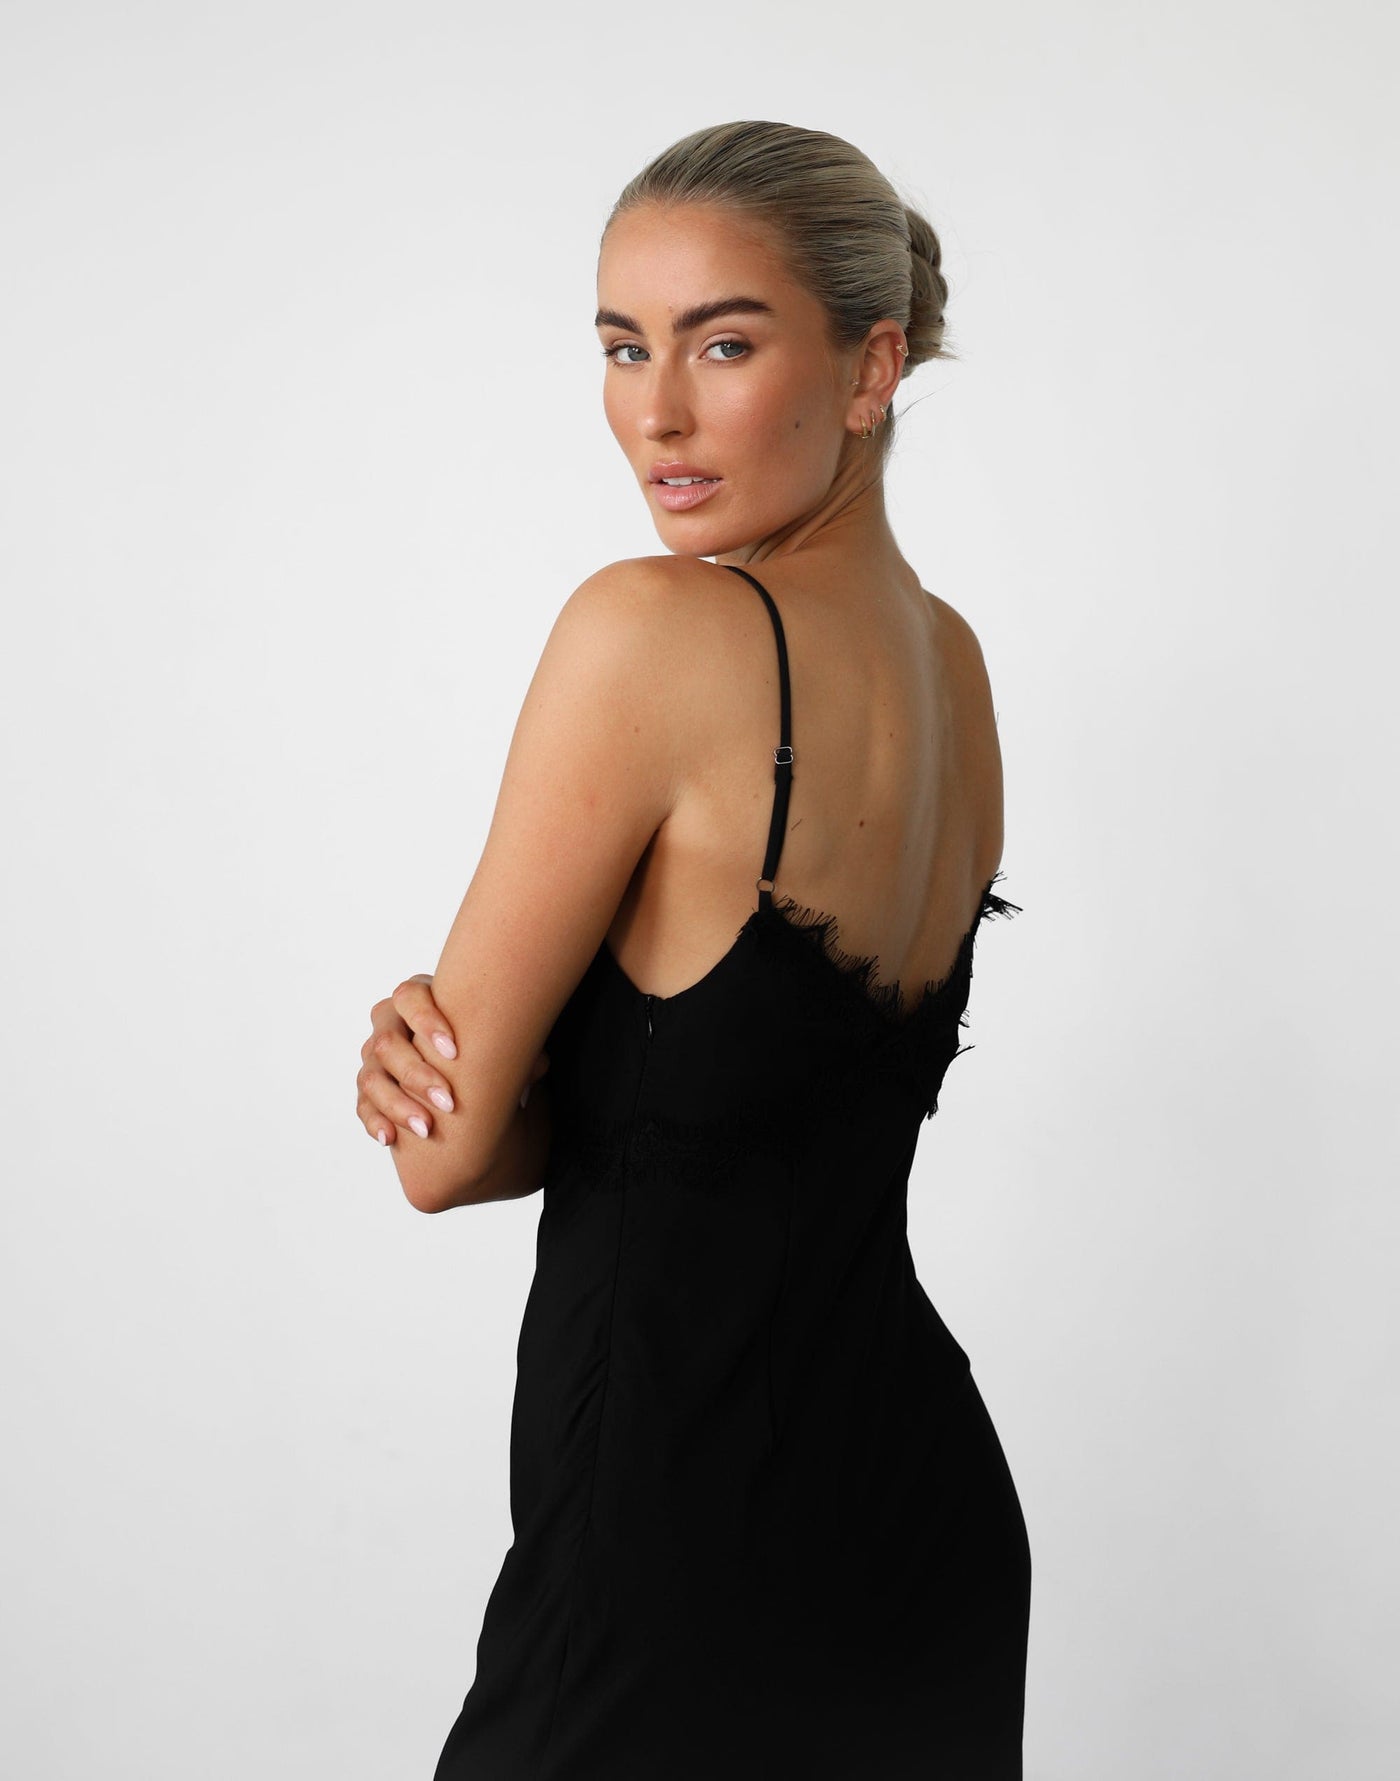 Every Time Maxi Dress (Black) - Lace Detail Satin Maxi Dress - Women's Dress - Charcoal Clothing